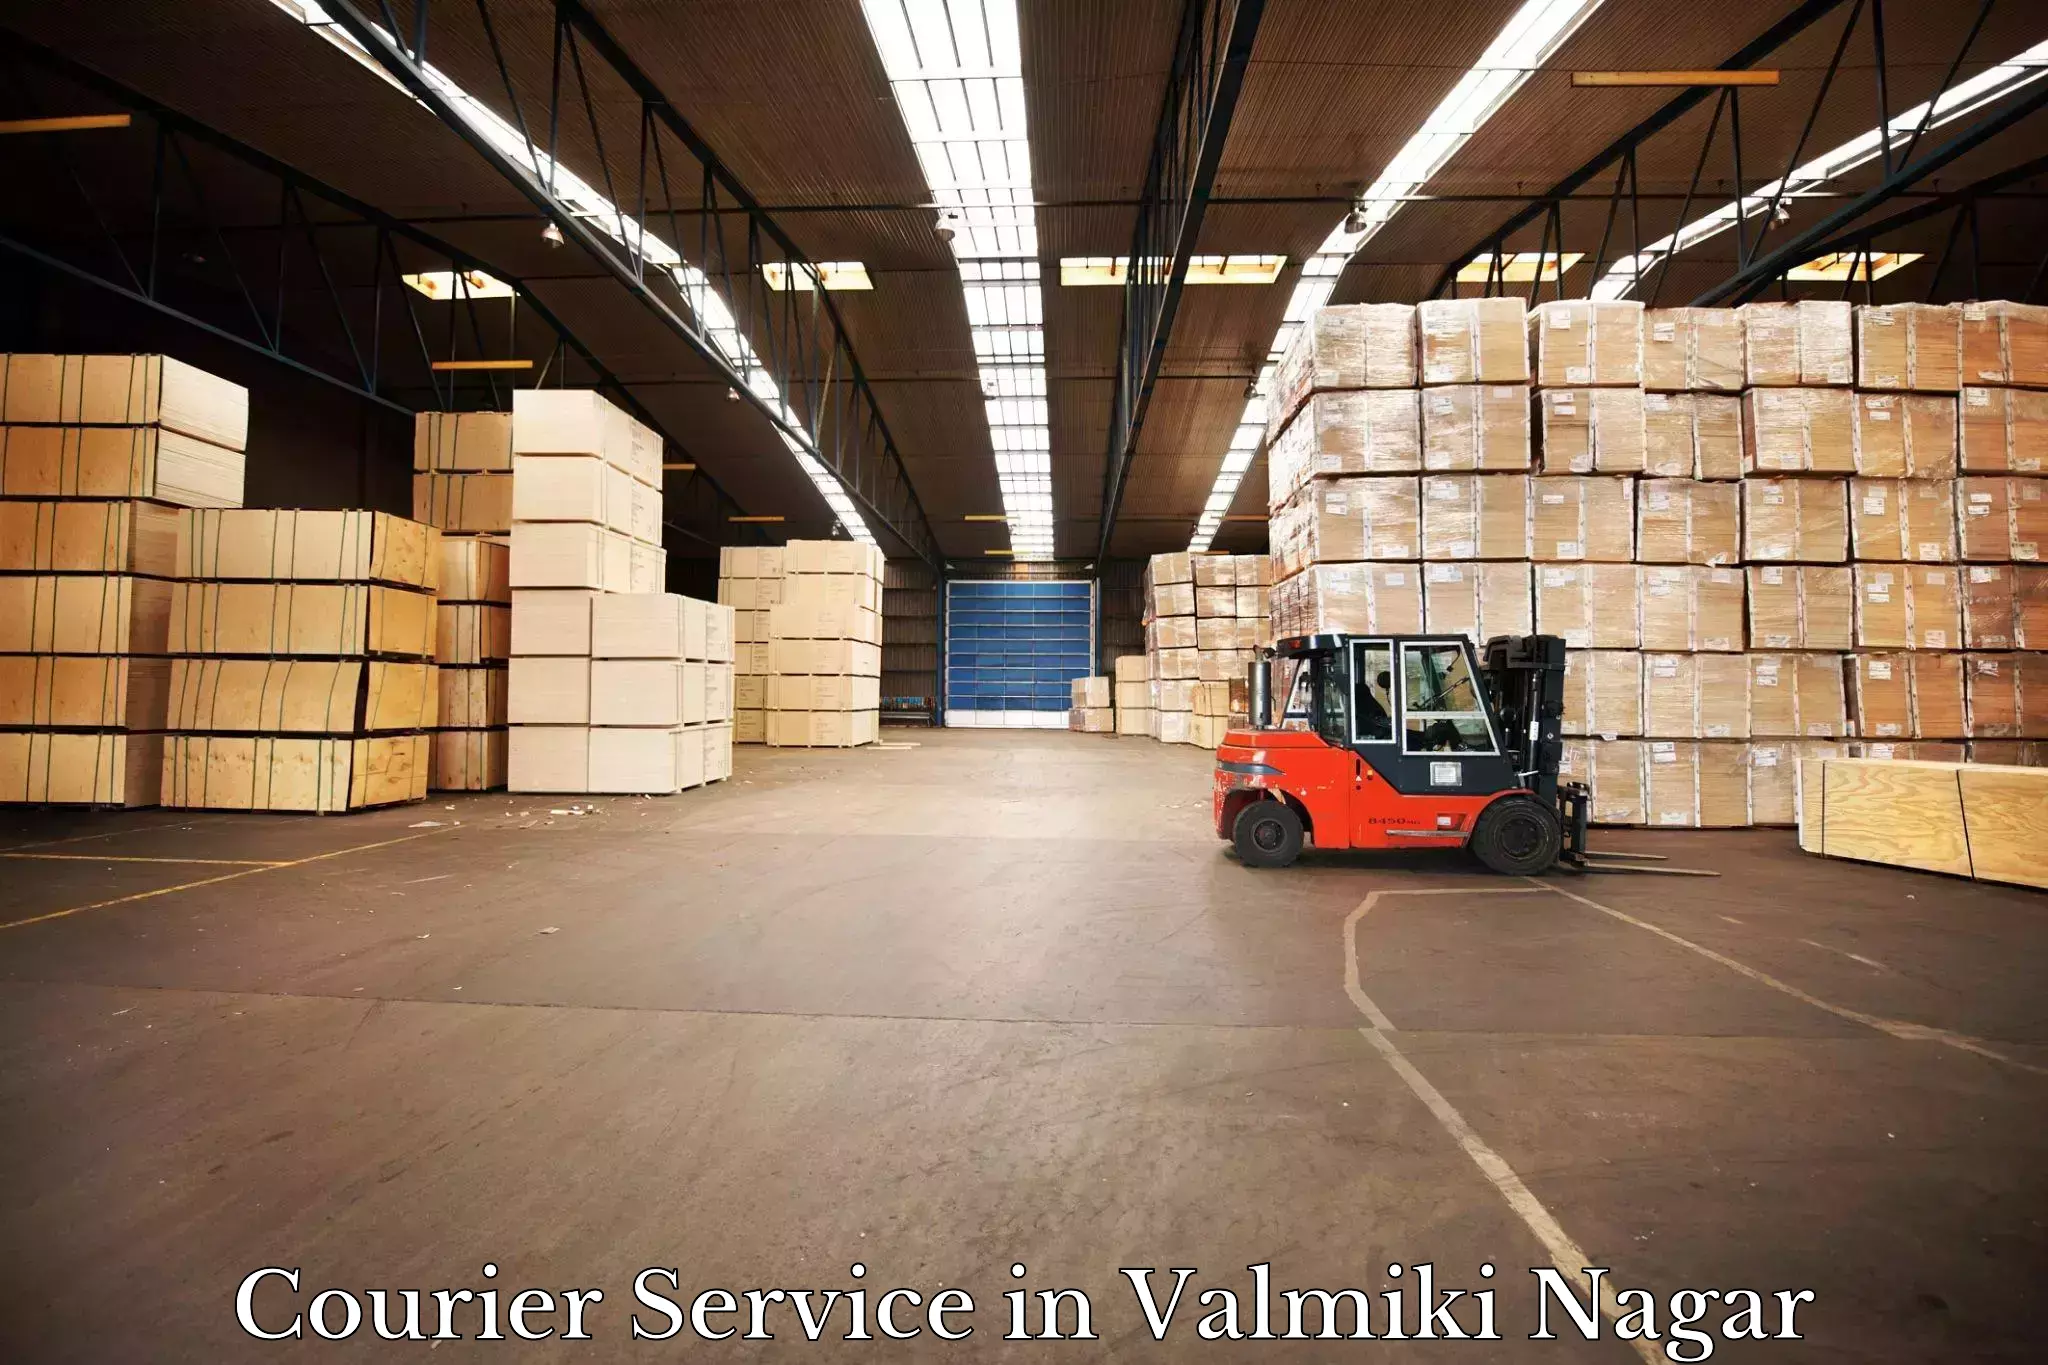 Tech-enabled shipping in Valmiki Nagar